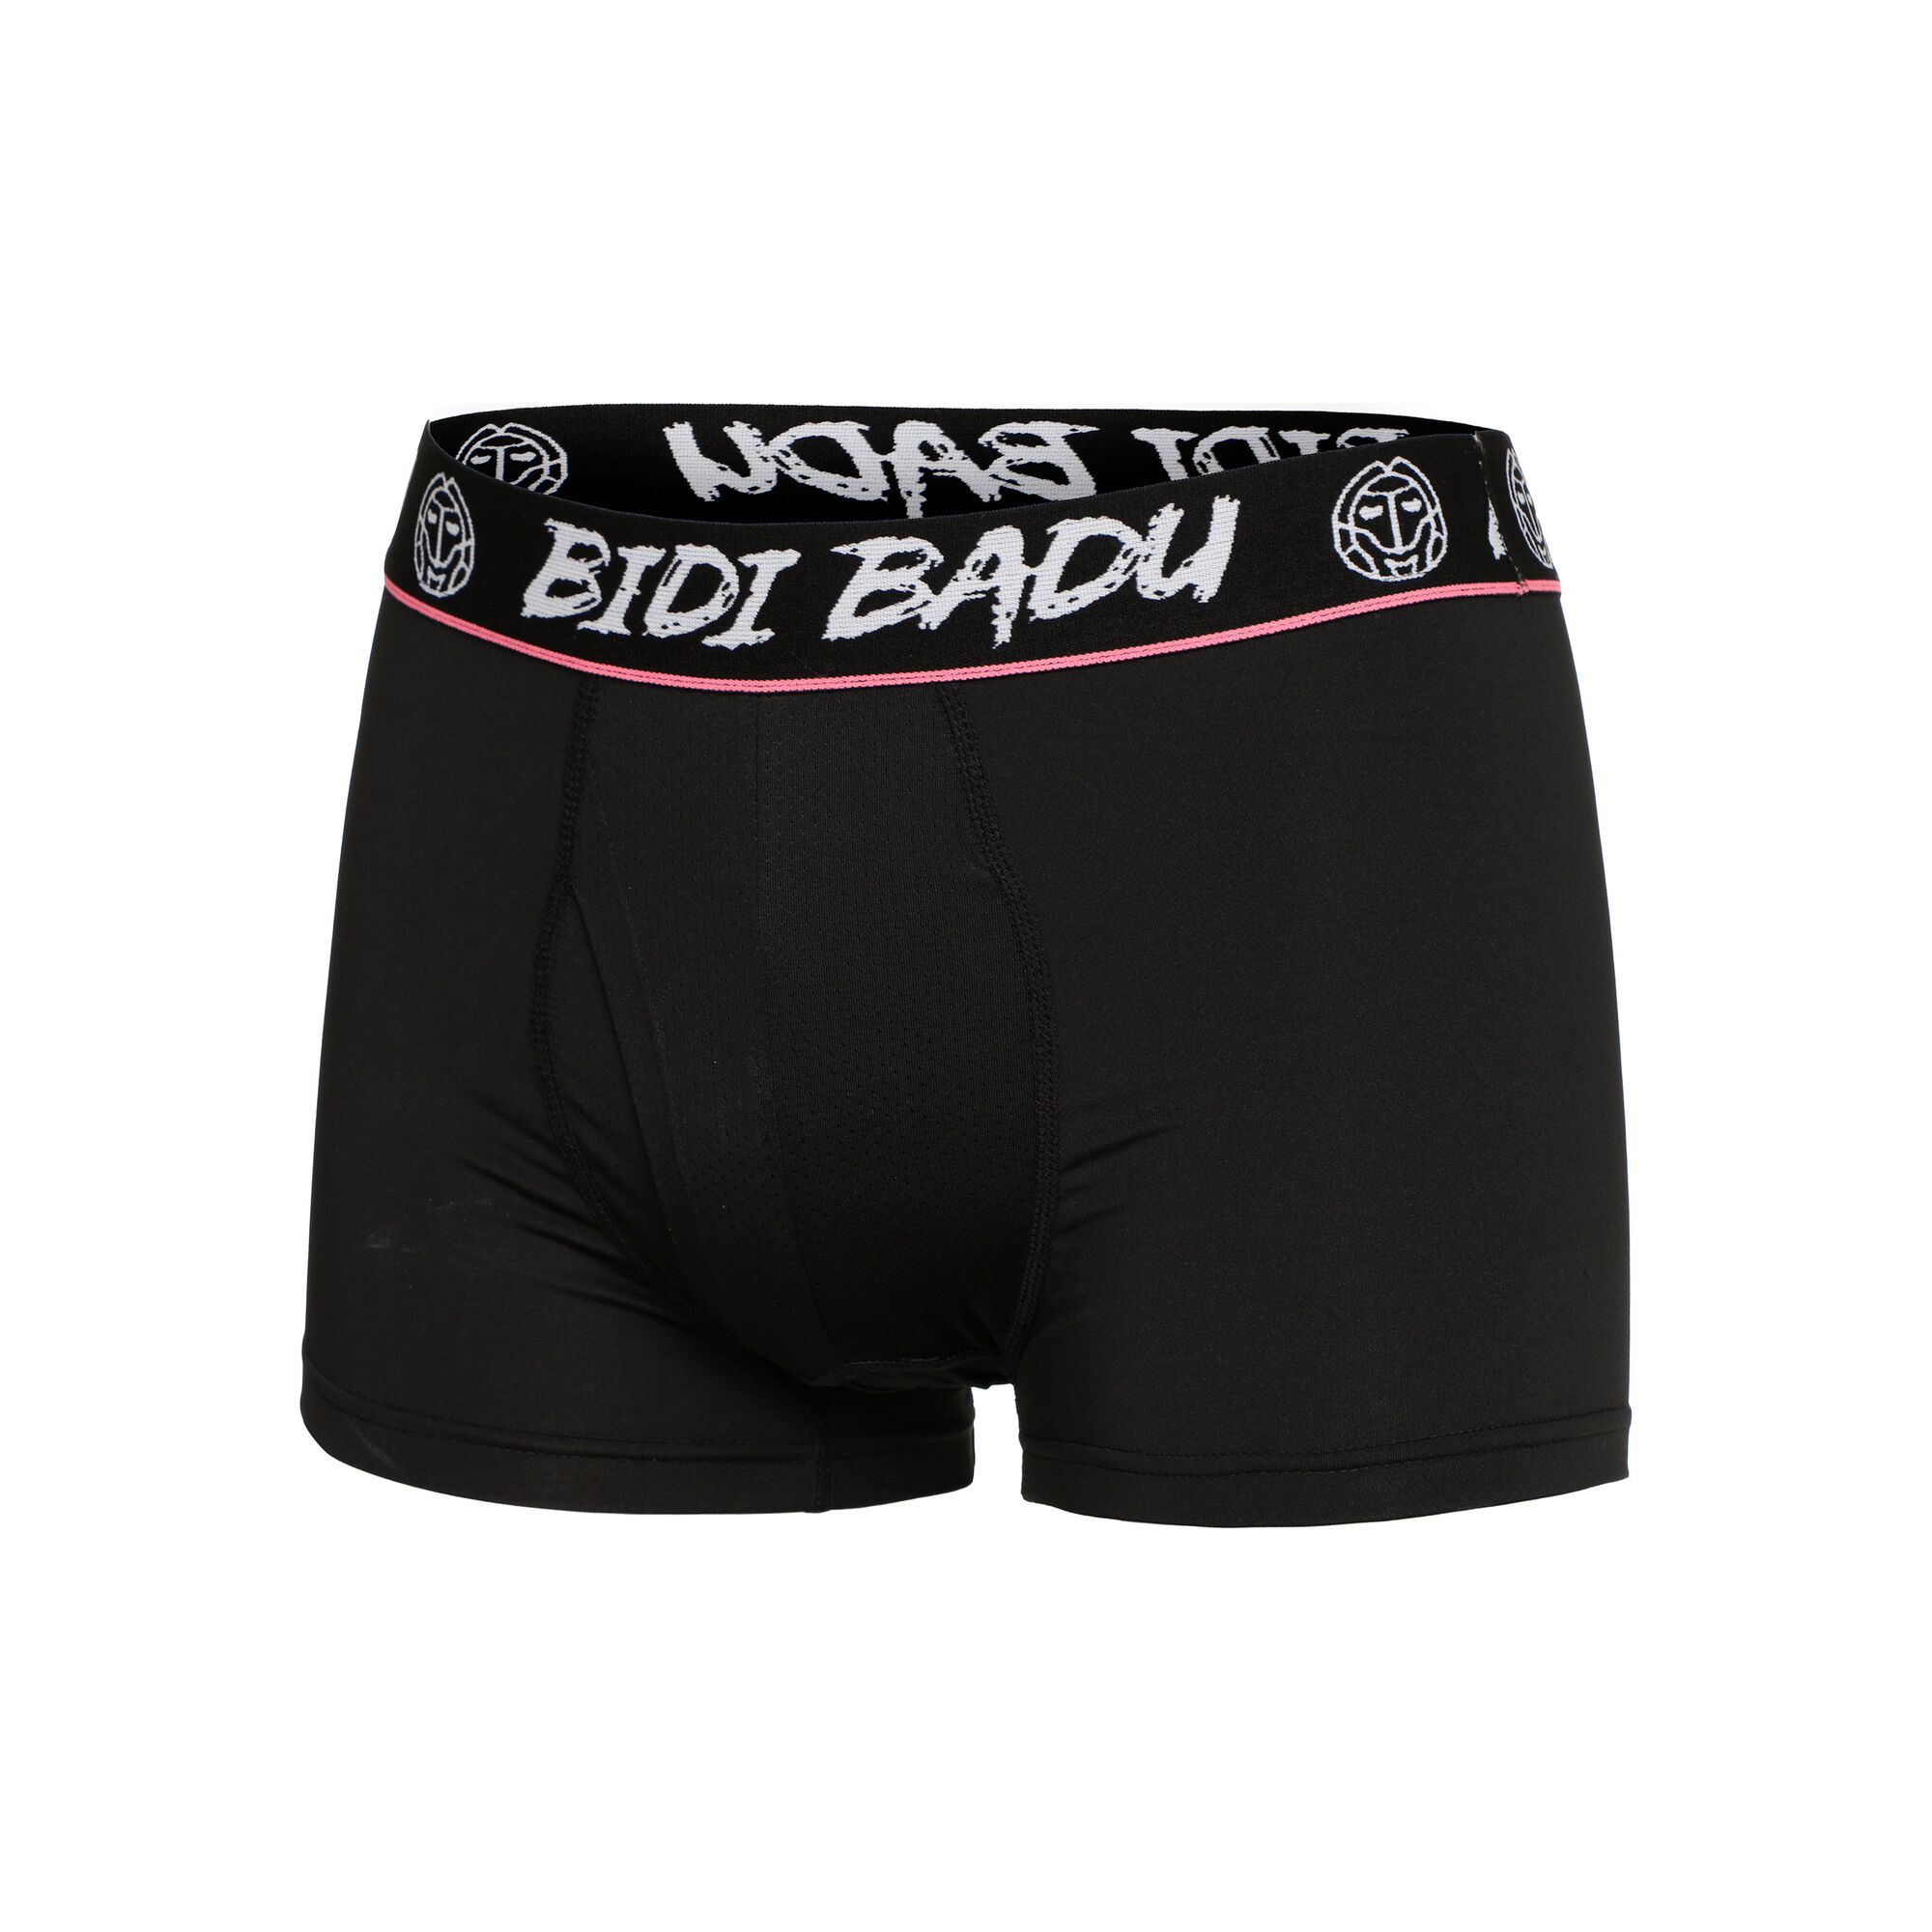 Buy BIDI BADU Crew Boxer Shorts Men Black online